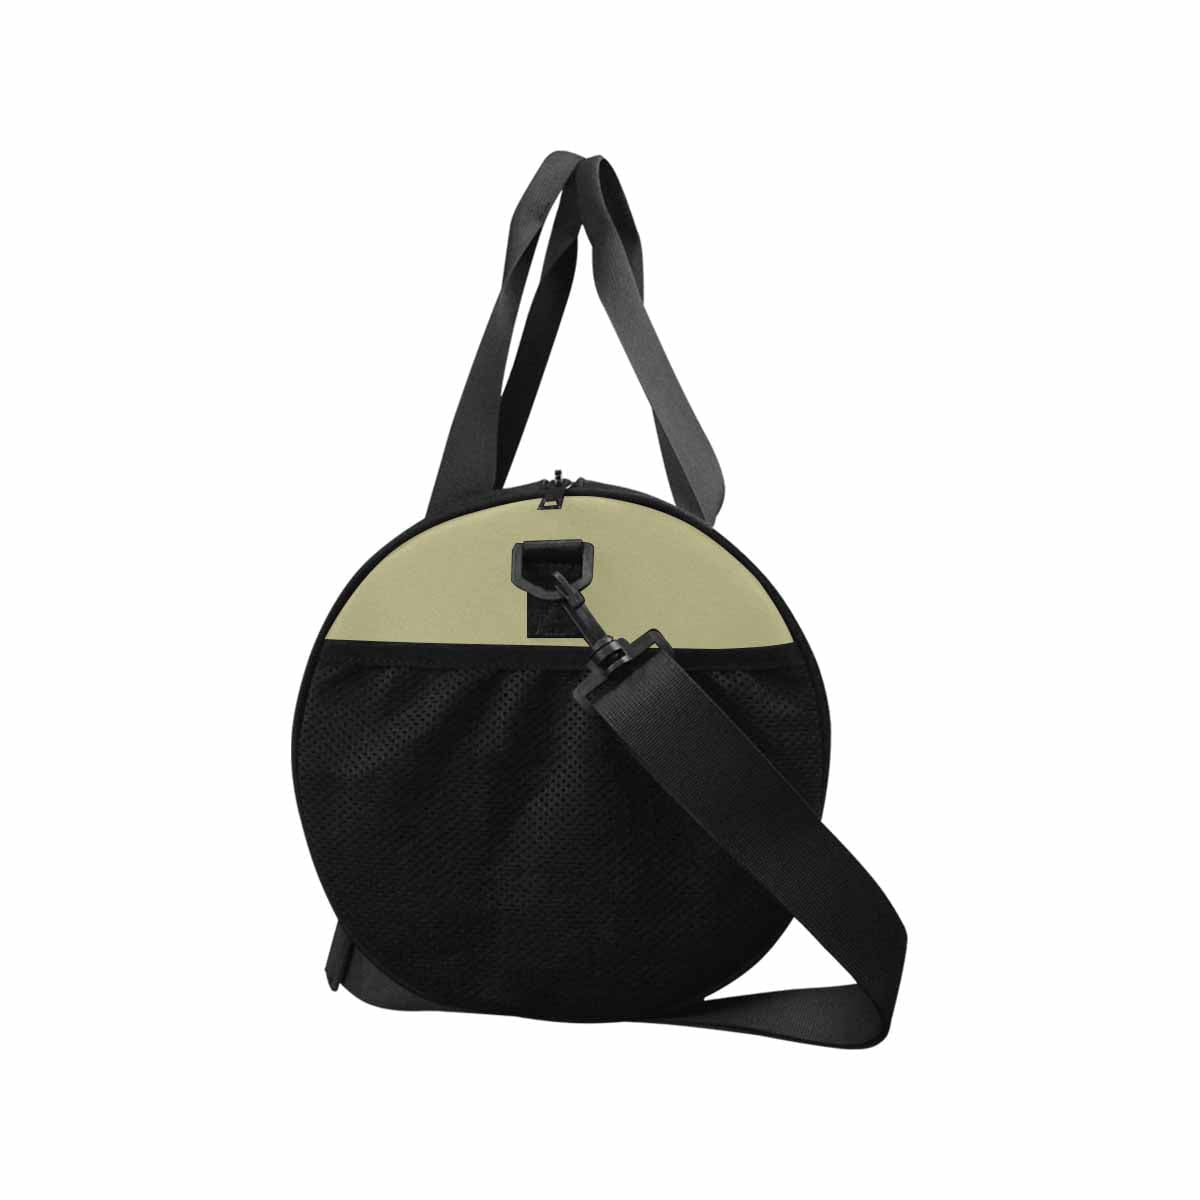 Travel Duffel Bag Sage Green Carry On - Bags | Duffel Bags